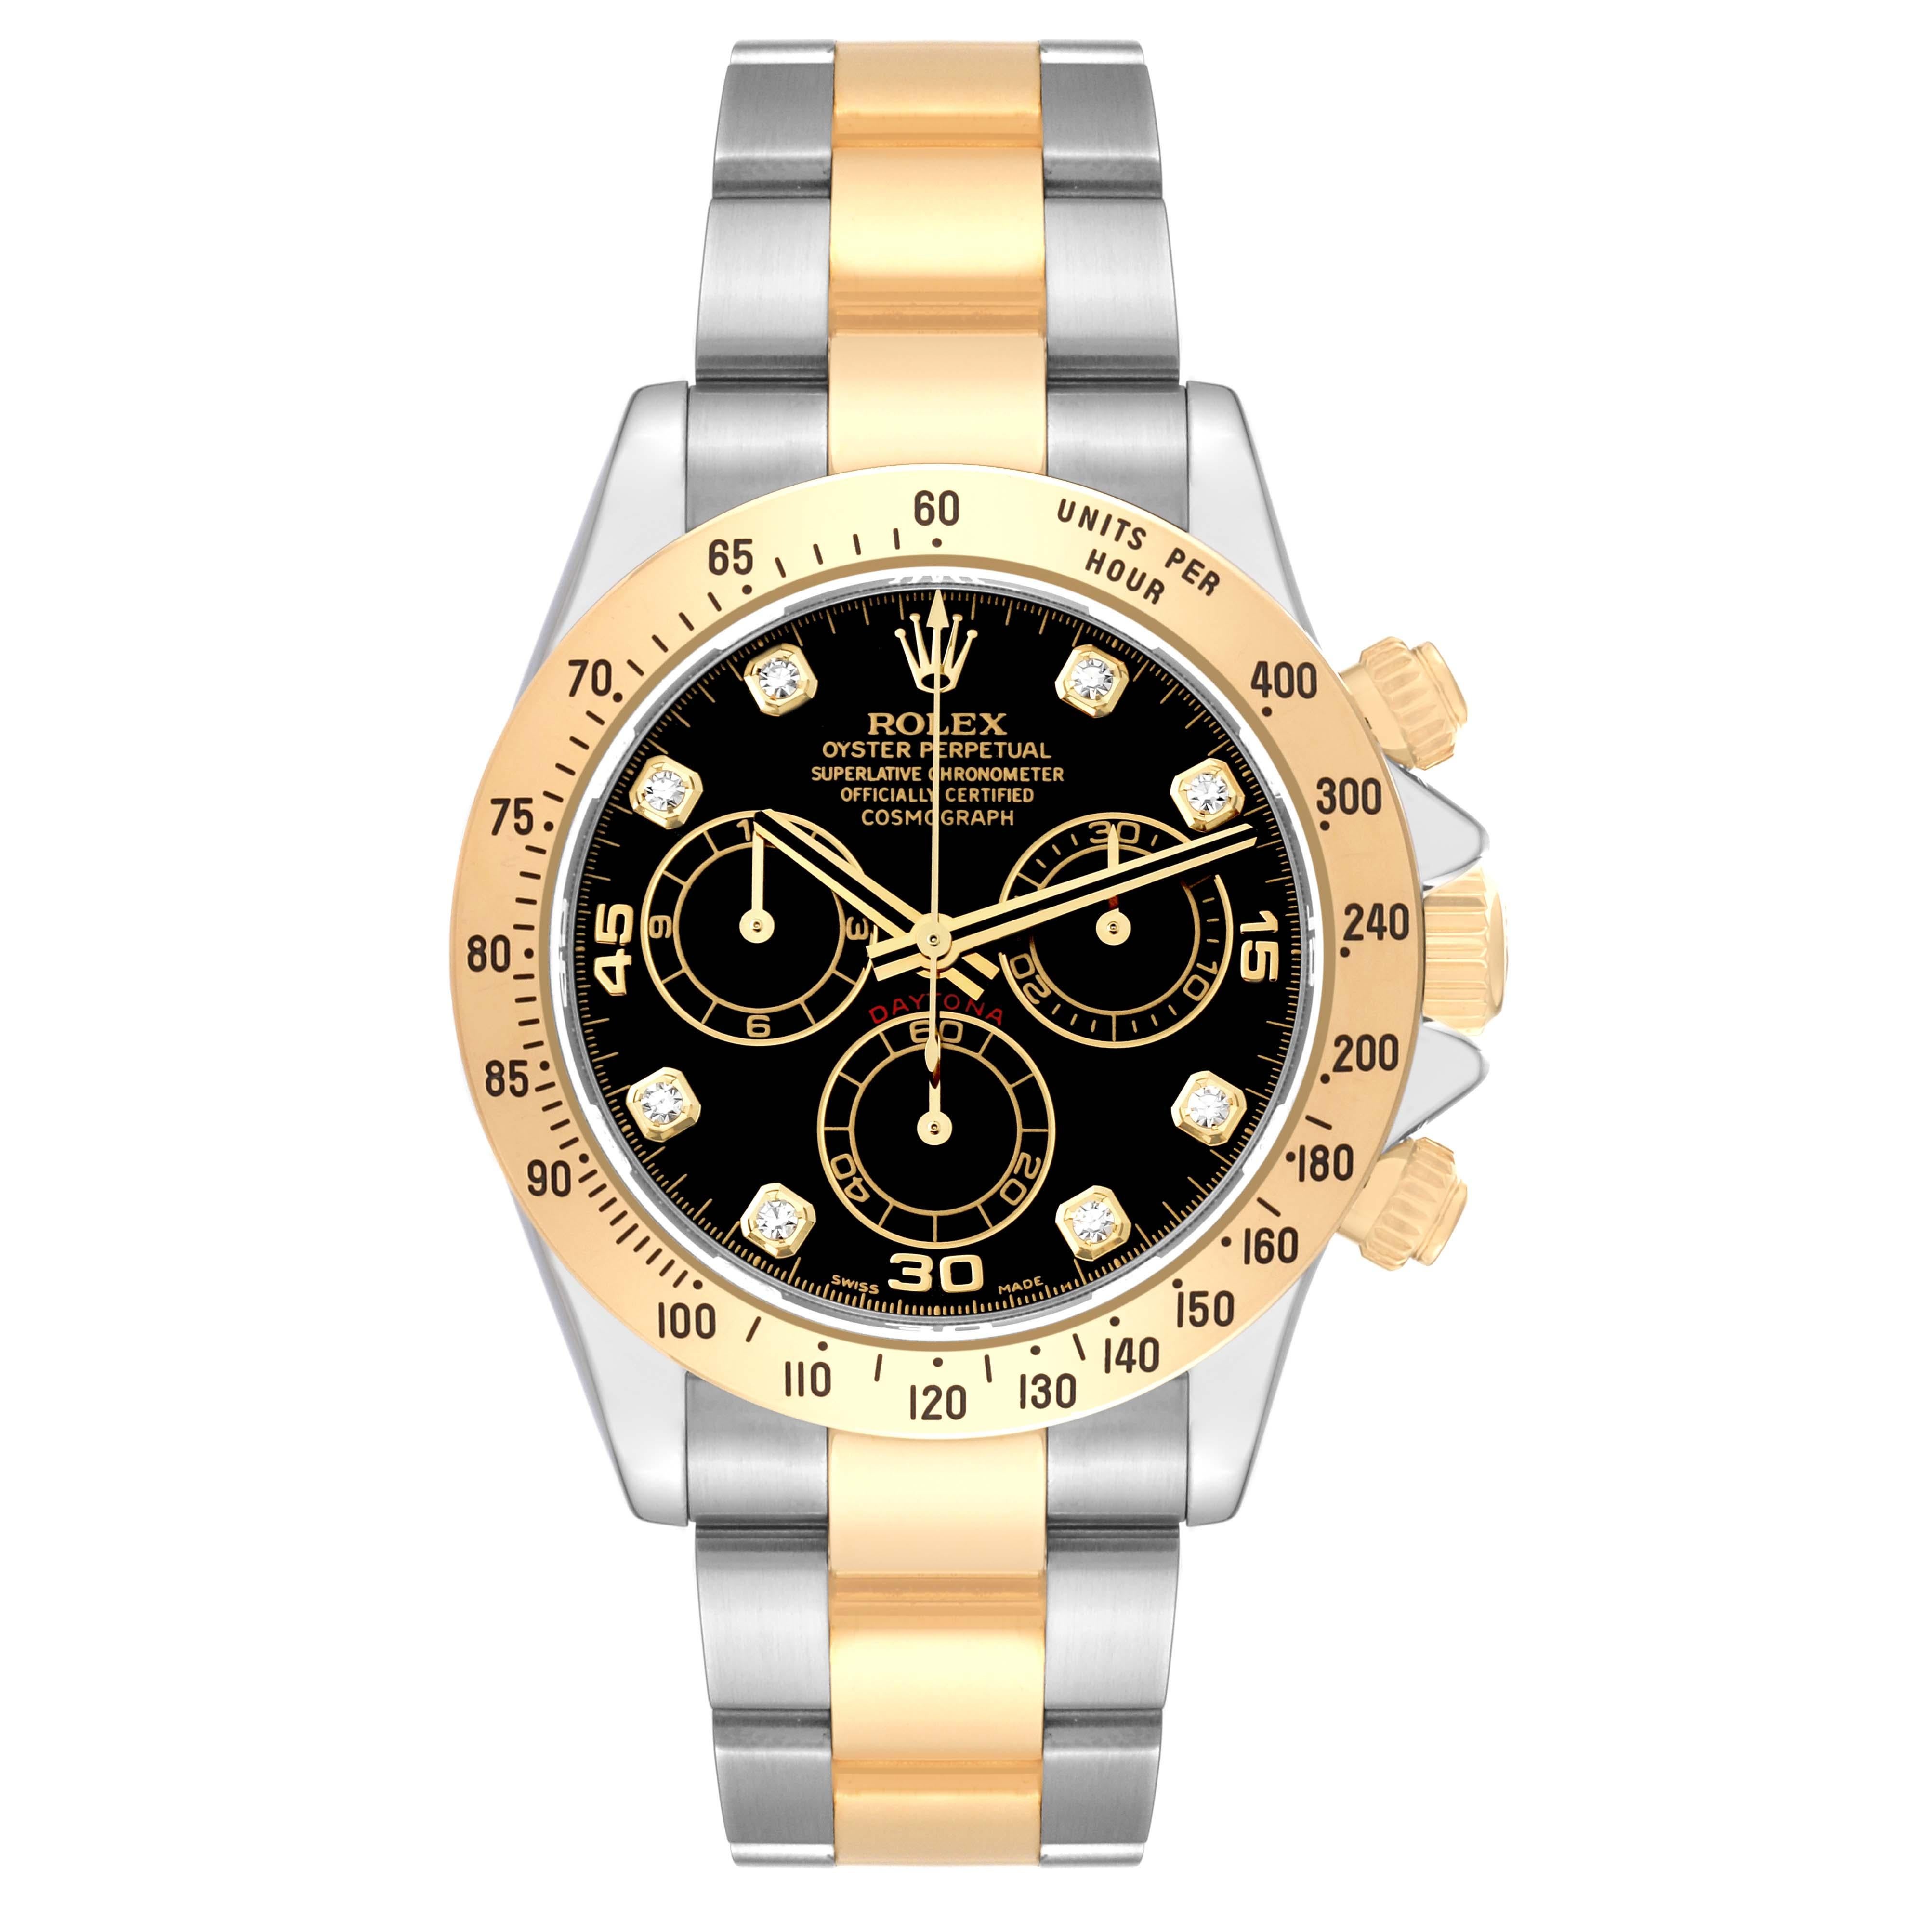 Rolex Daytona Steel Yellow Gold Black Diamond Dial Mens Watch 116523. Officially certified chronometer automatic self-winding chronograph movement. Rhodium-plated, oeil-de-perdrix decoration, straight line lever escapement, monometallic balance